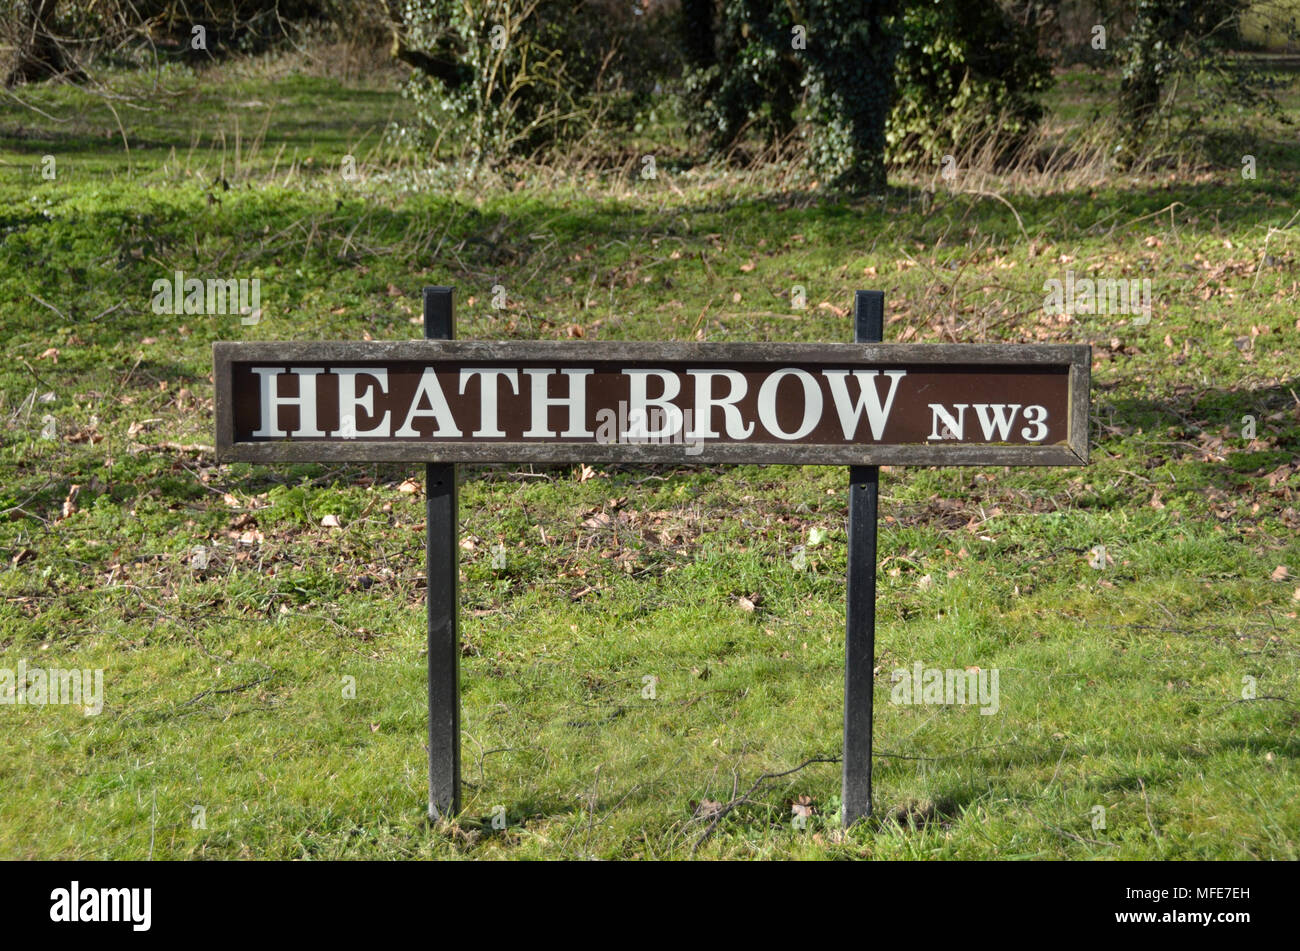 Heide Braue NW3 street sign, Hampstead, London, UK. Stockfoto